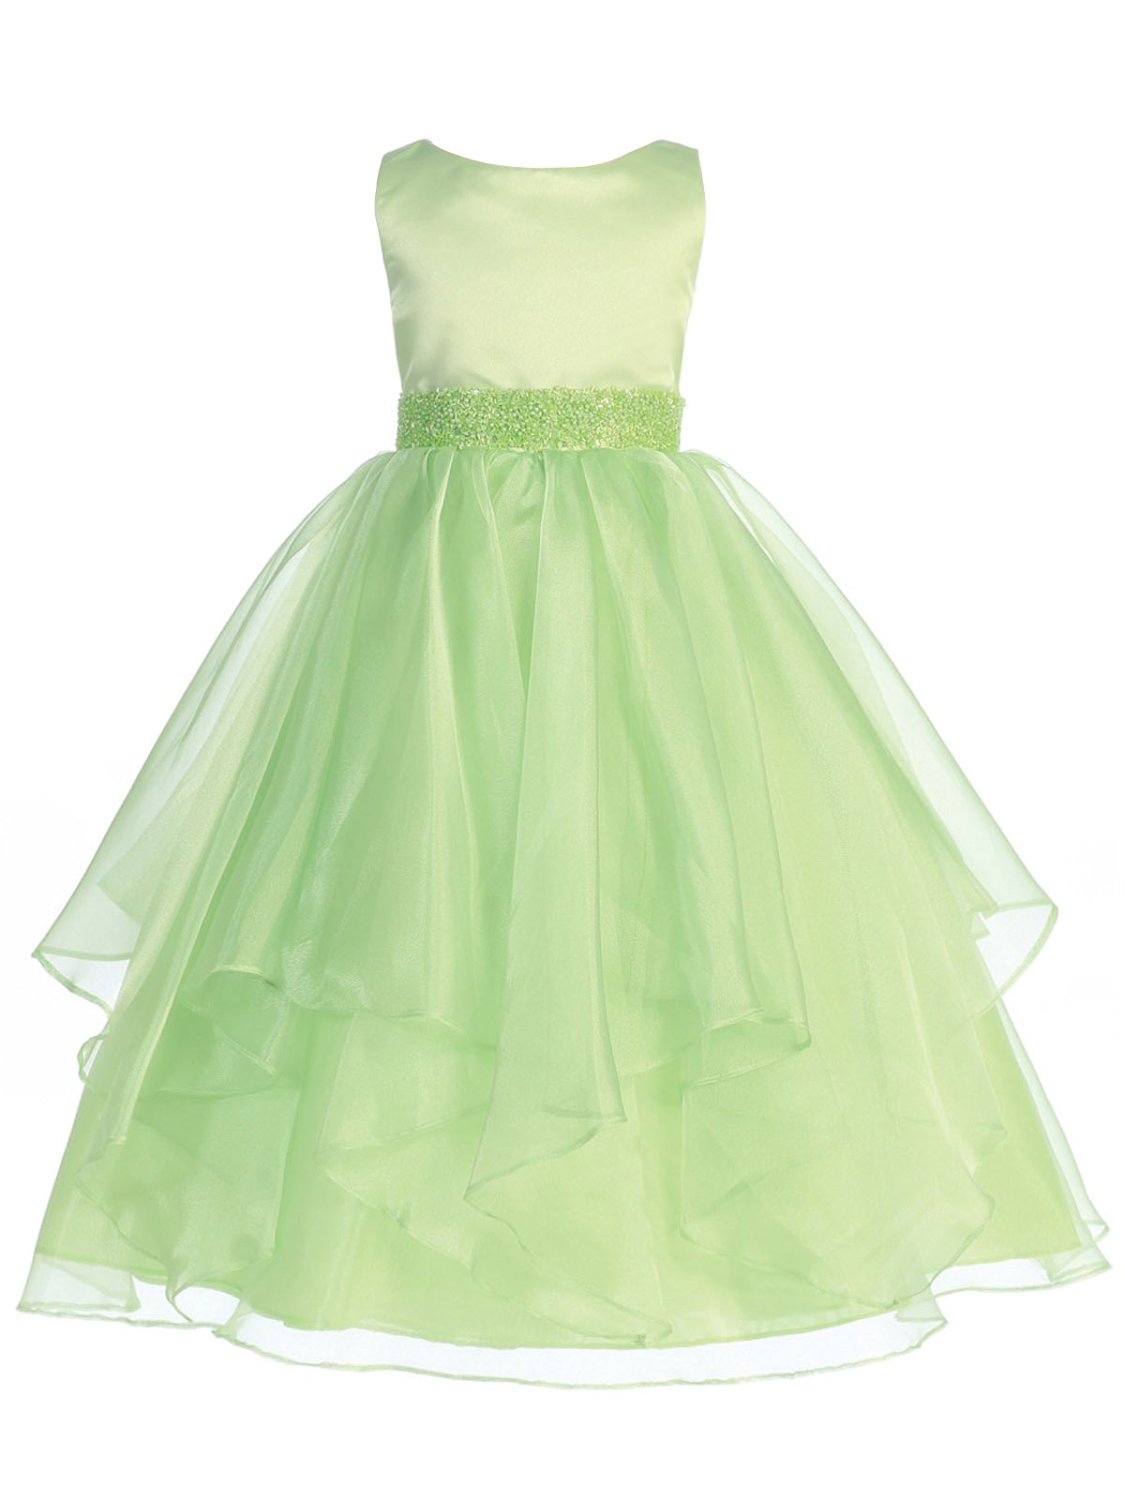 Chic Baby Girls Asymmetric Ruffles Satin/Organza Flower Girl Dress-Lime-6